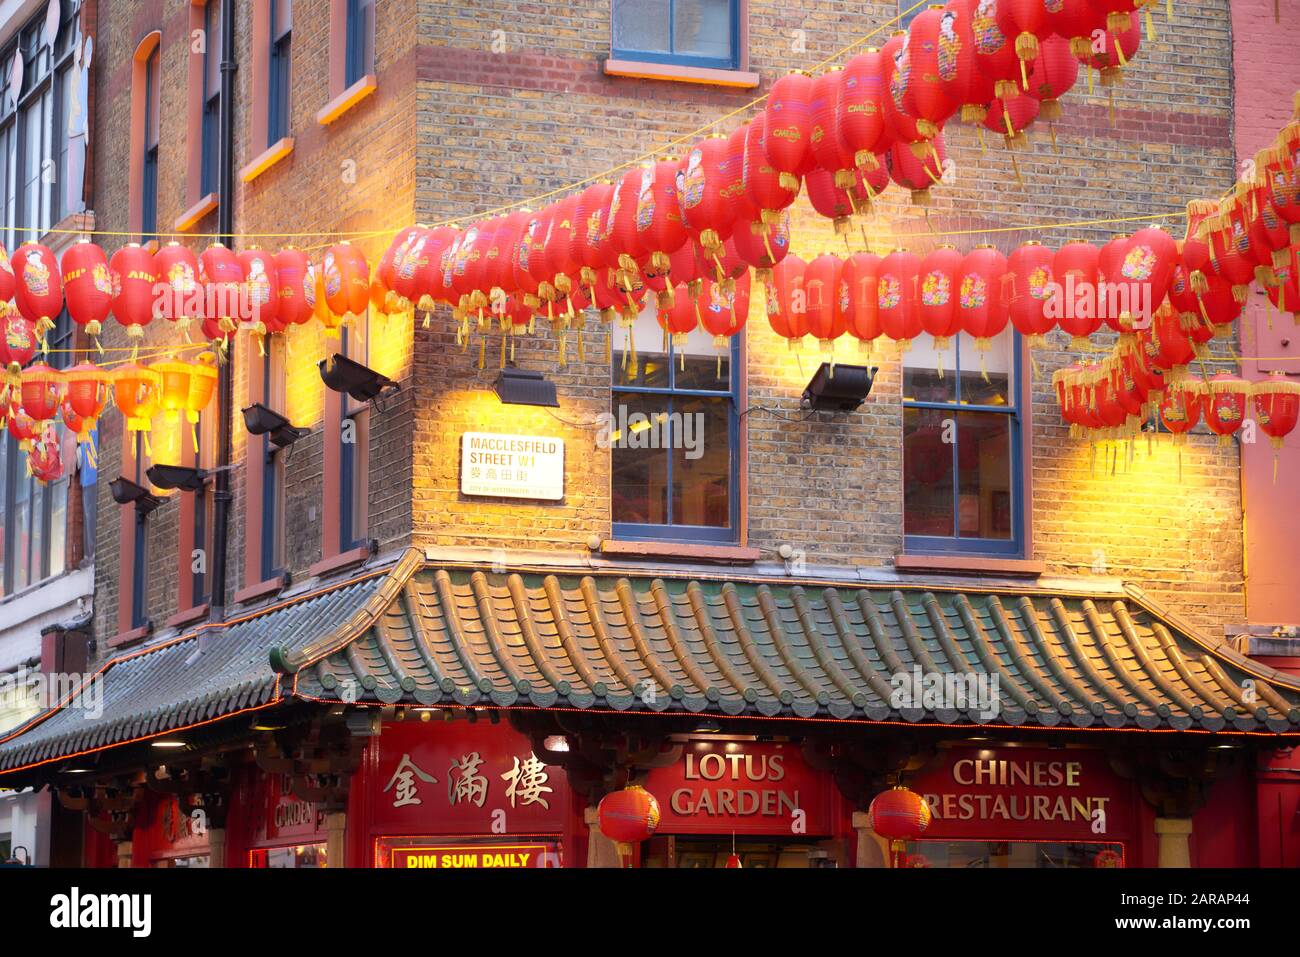 Chinese Restaurant China Town London Stockfotos Chinese